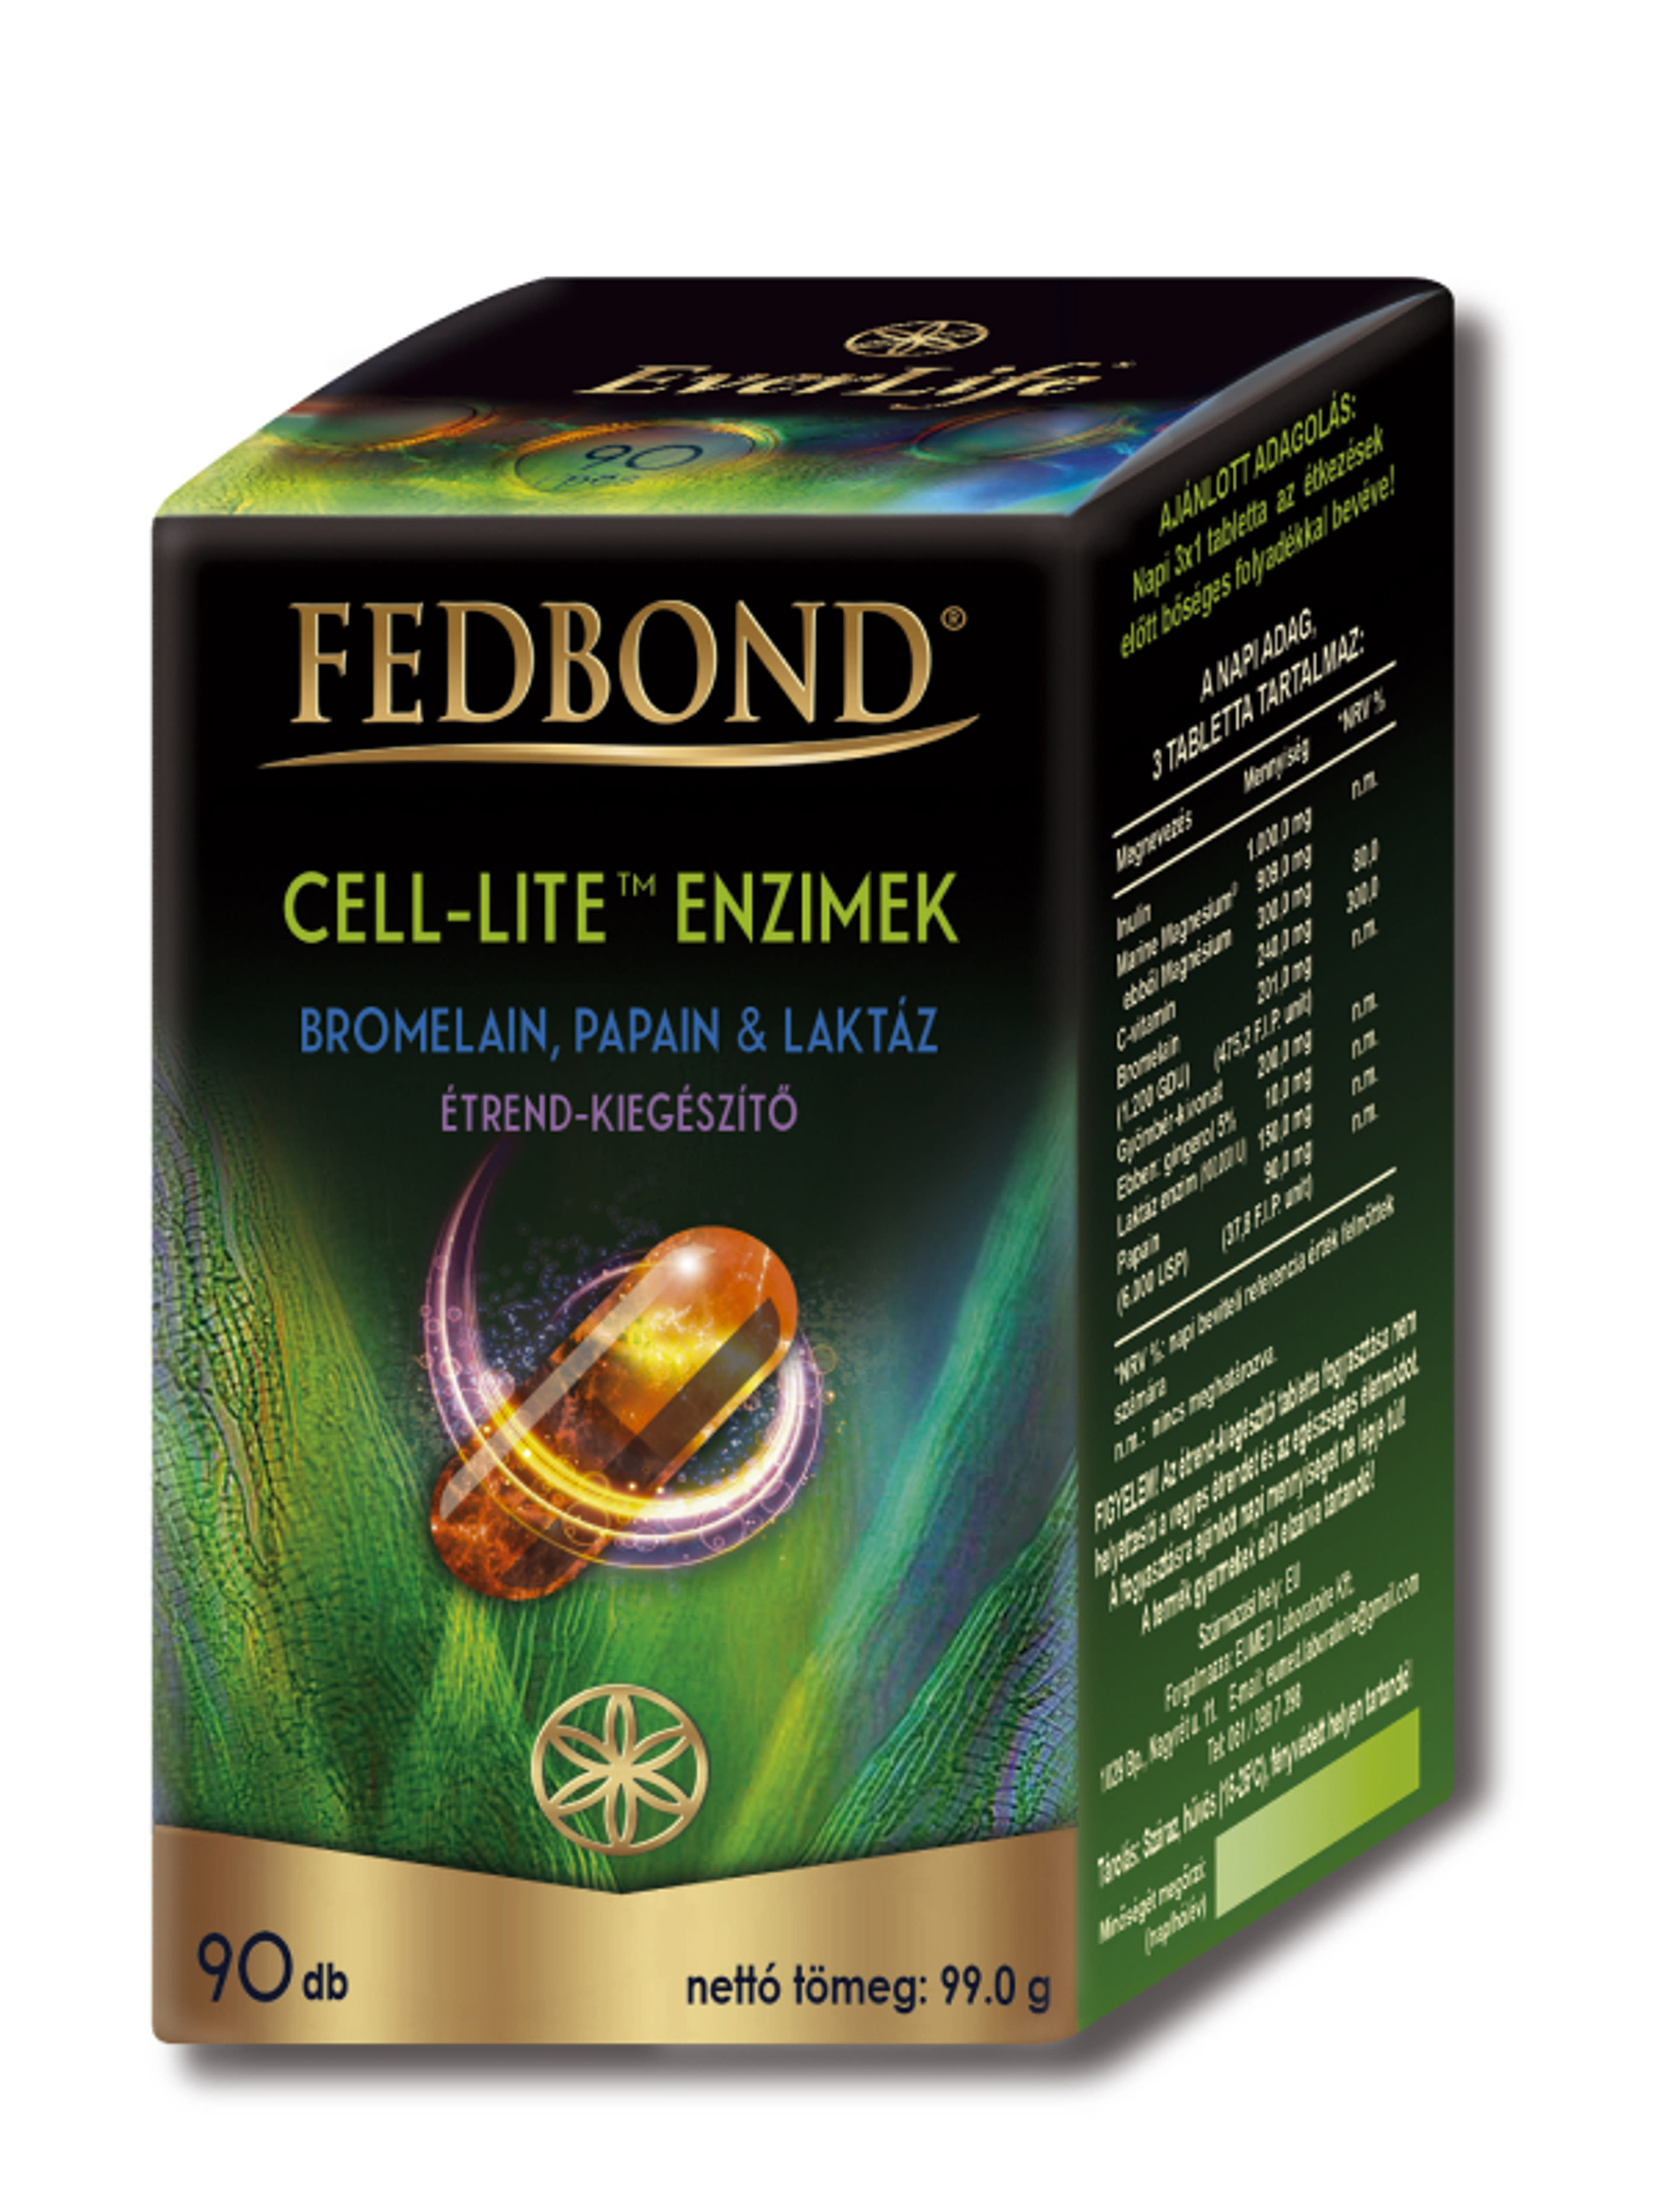 Fedbond Cell-Lite enzimek tabletta - 90 db